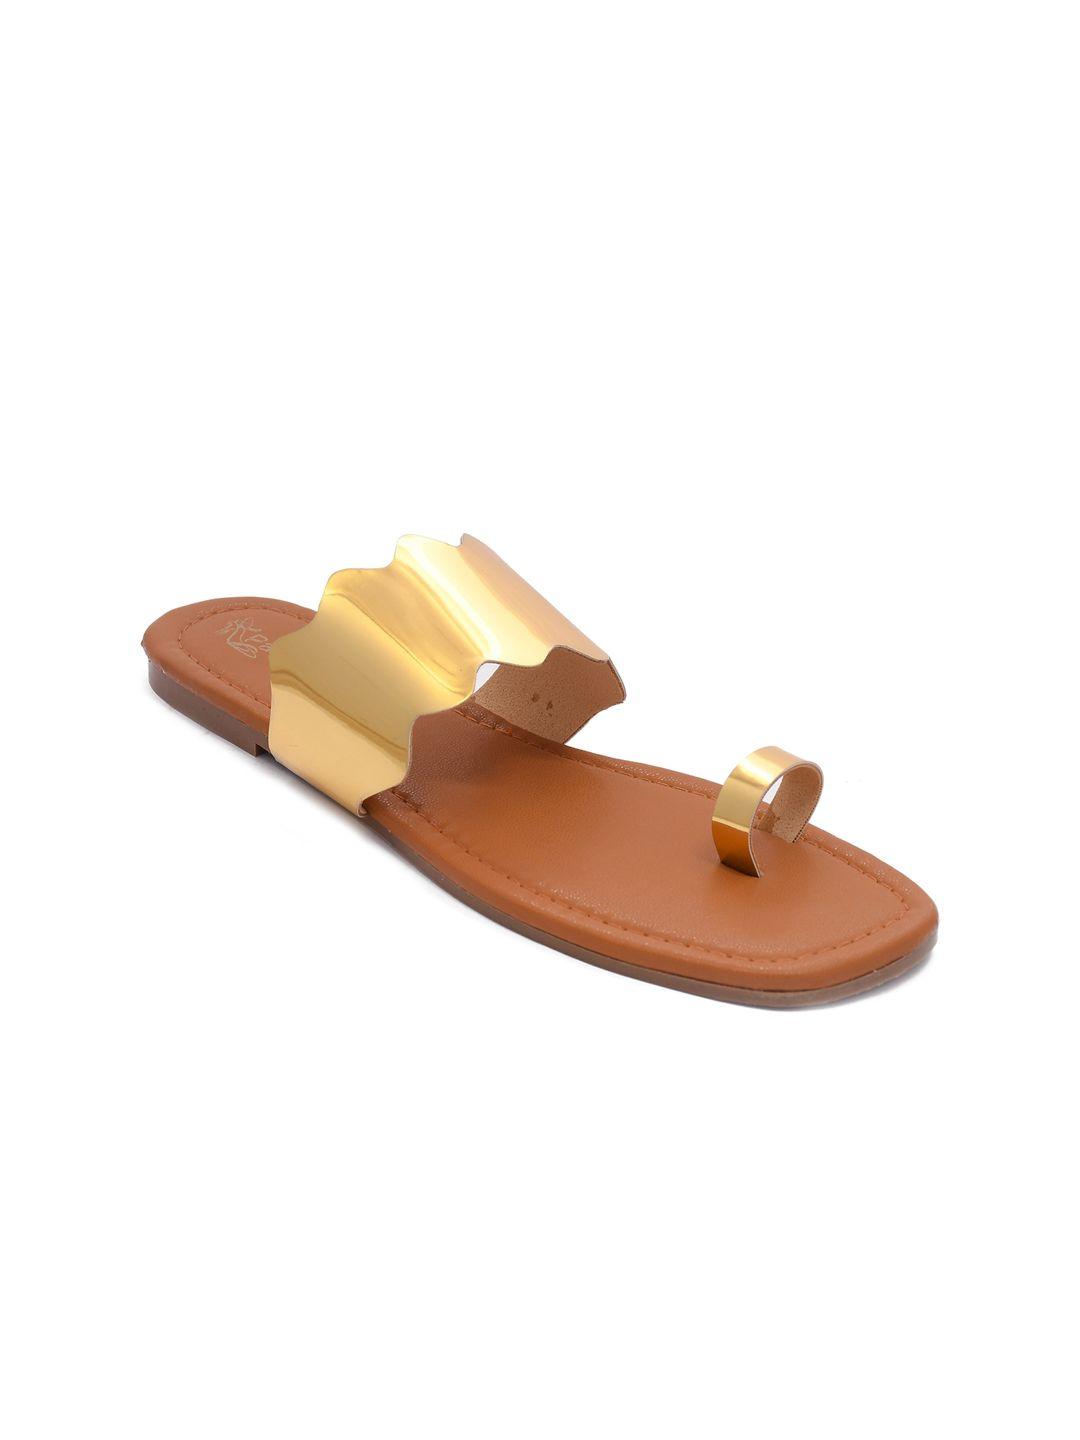 padvesh women gold-toned one toe flats